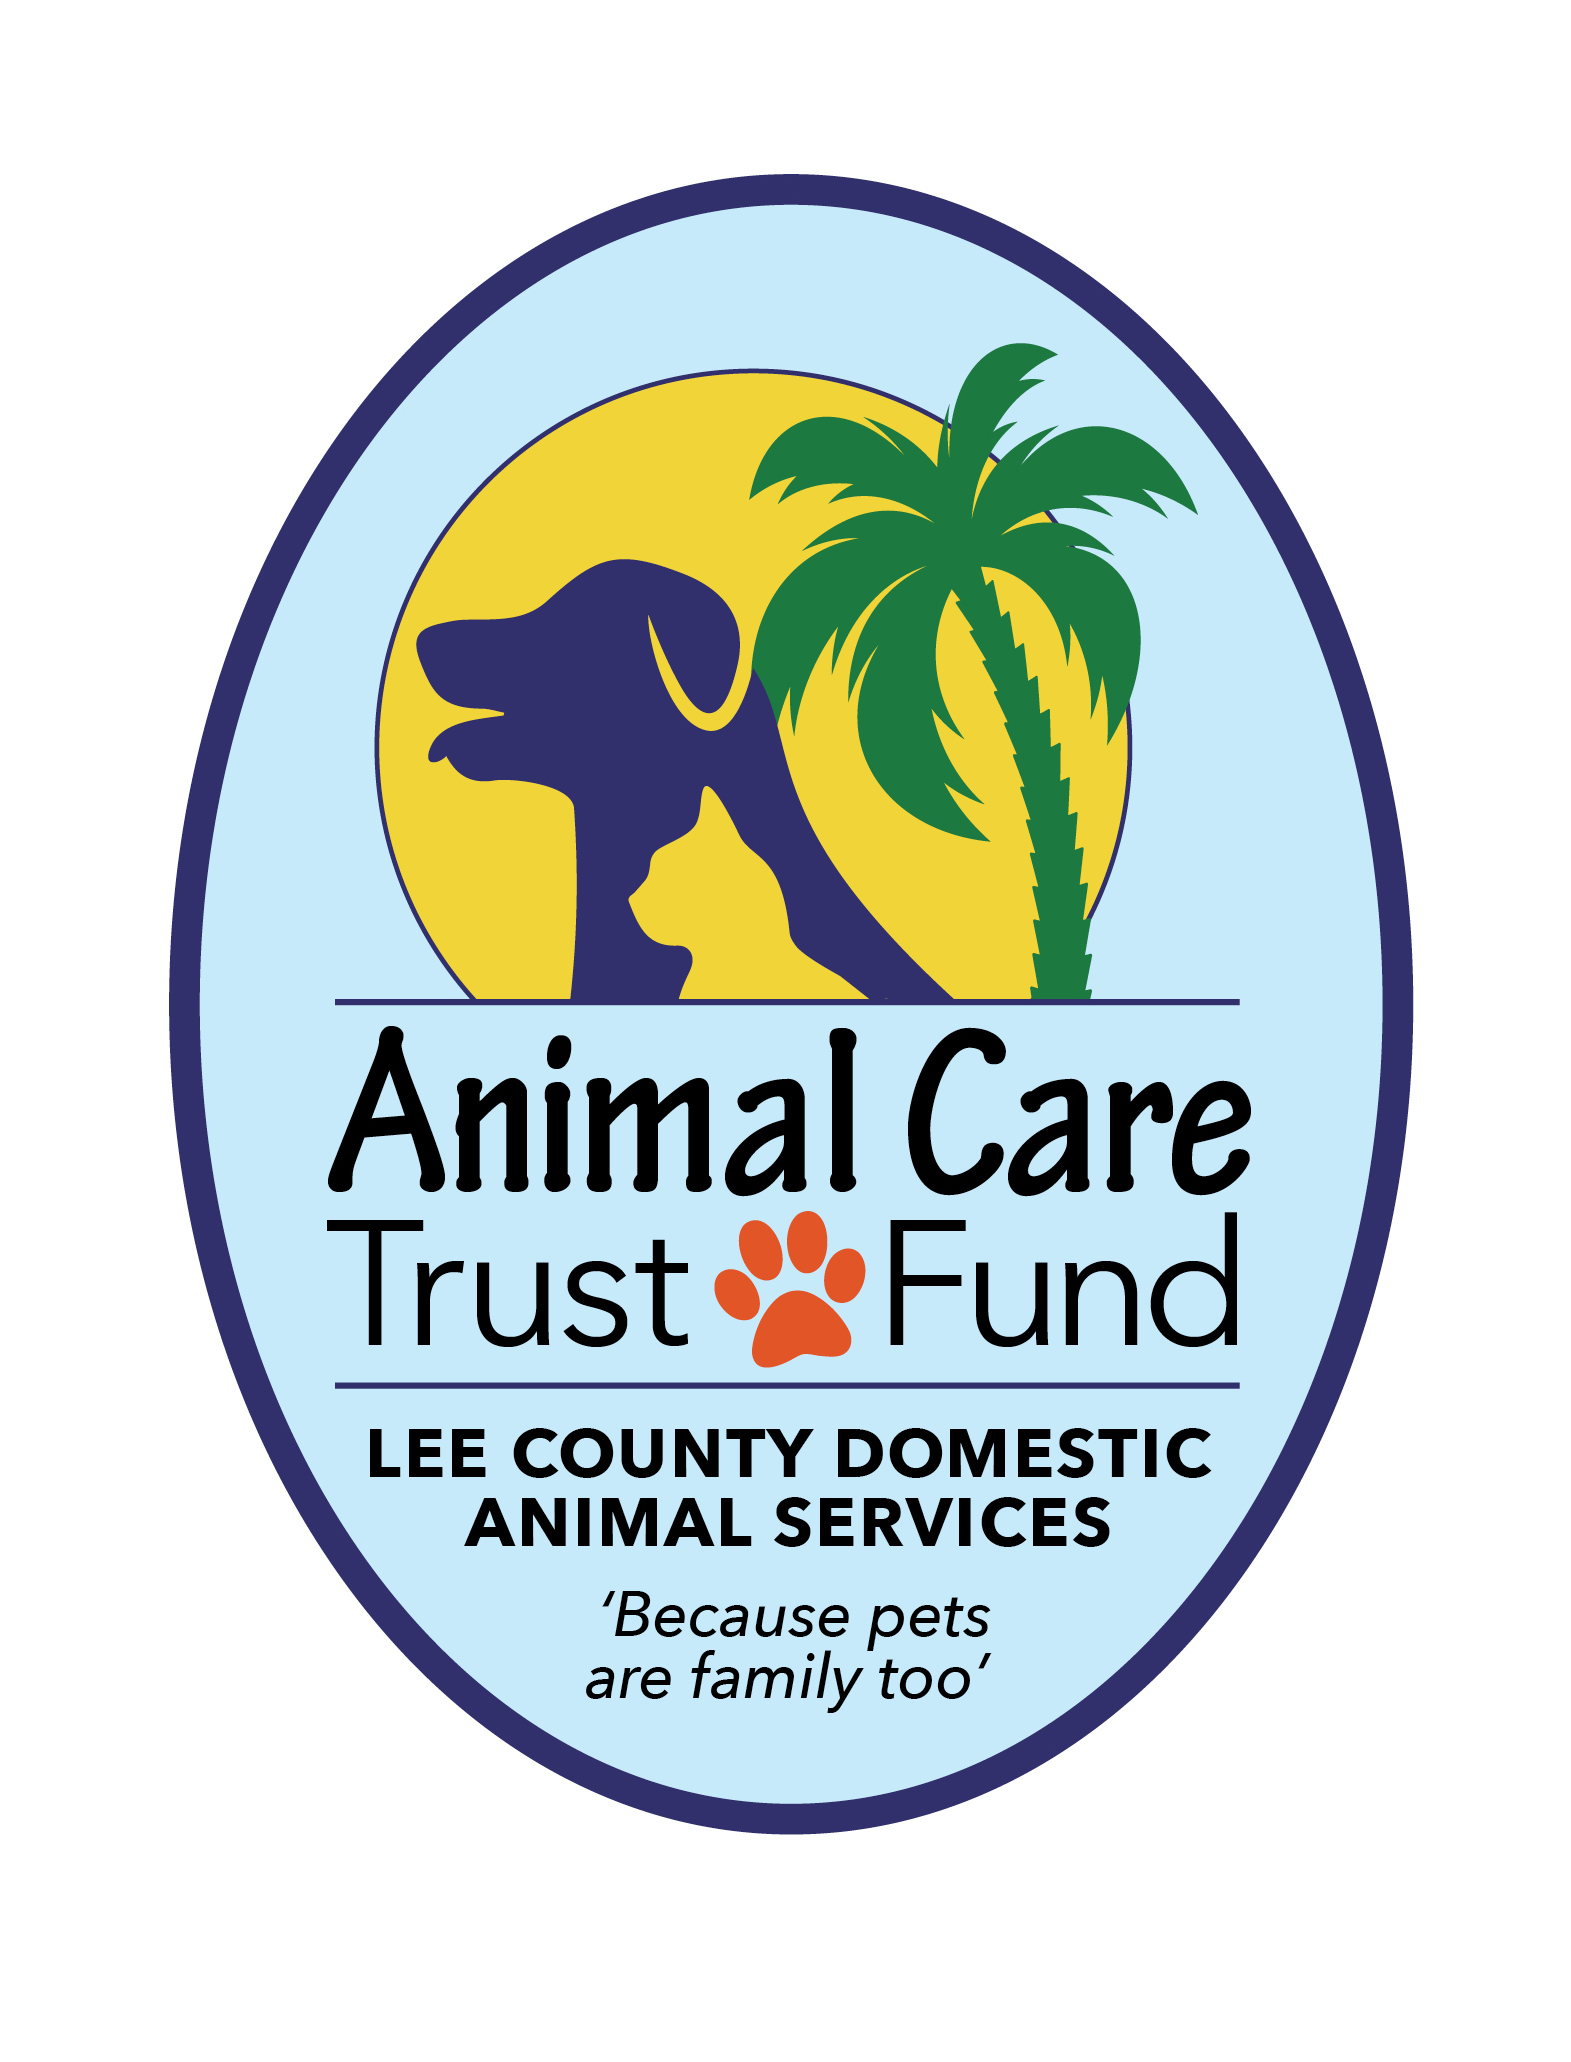 Animal Care Trust Fund logo